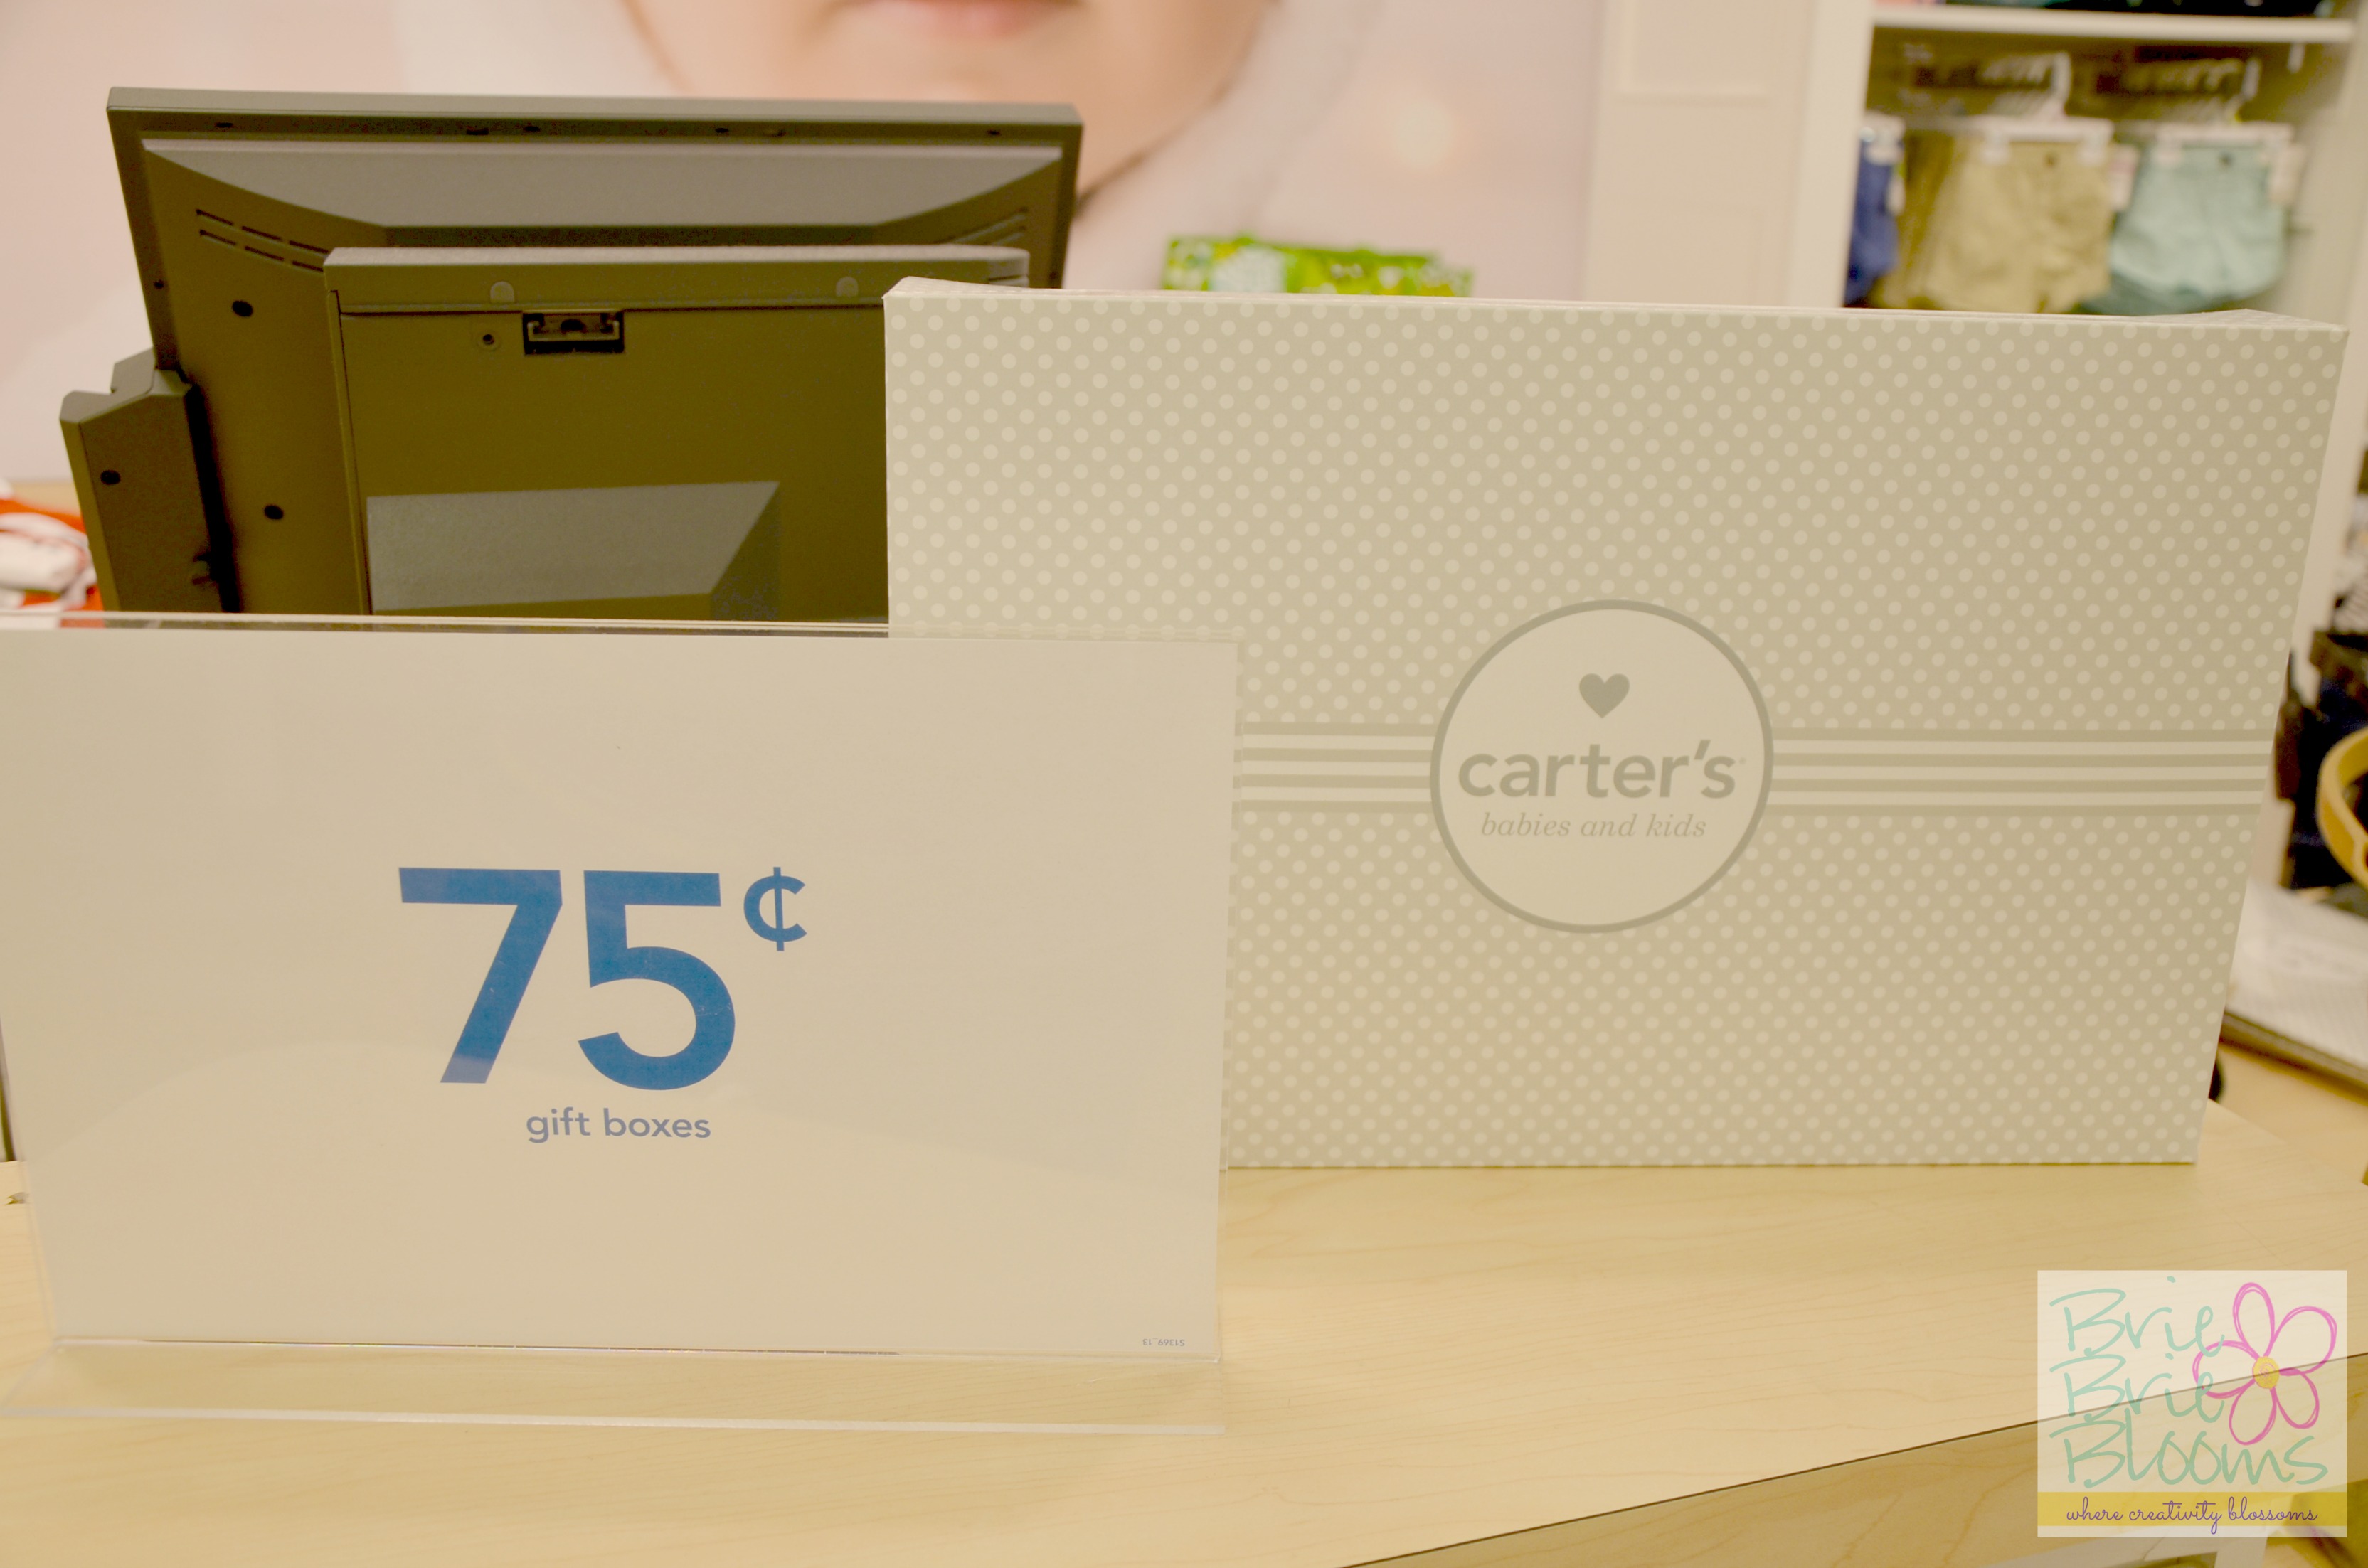 Carter's gift boxes #CartersFam #sponsored #MC